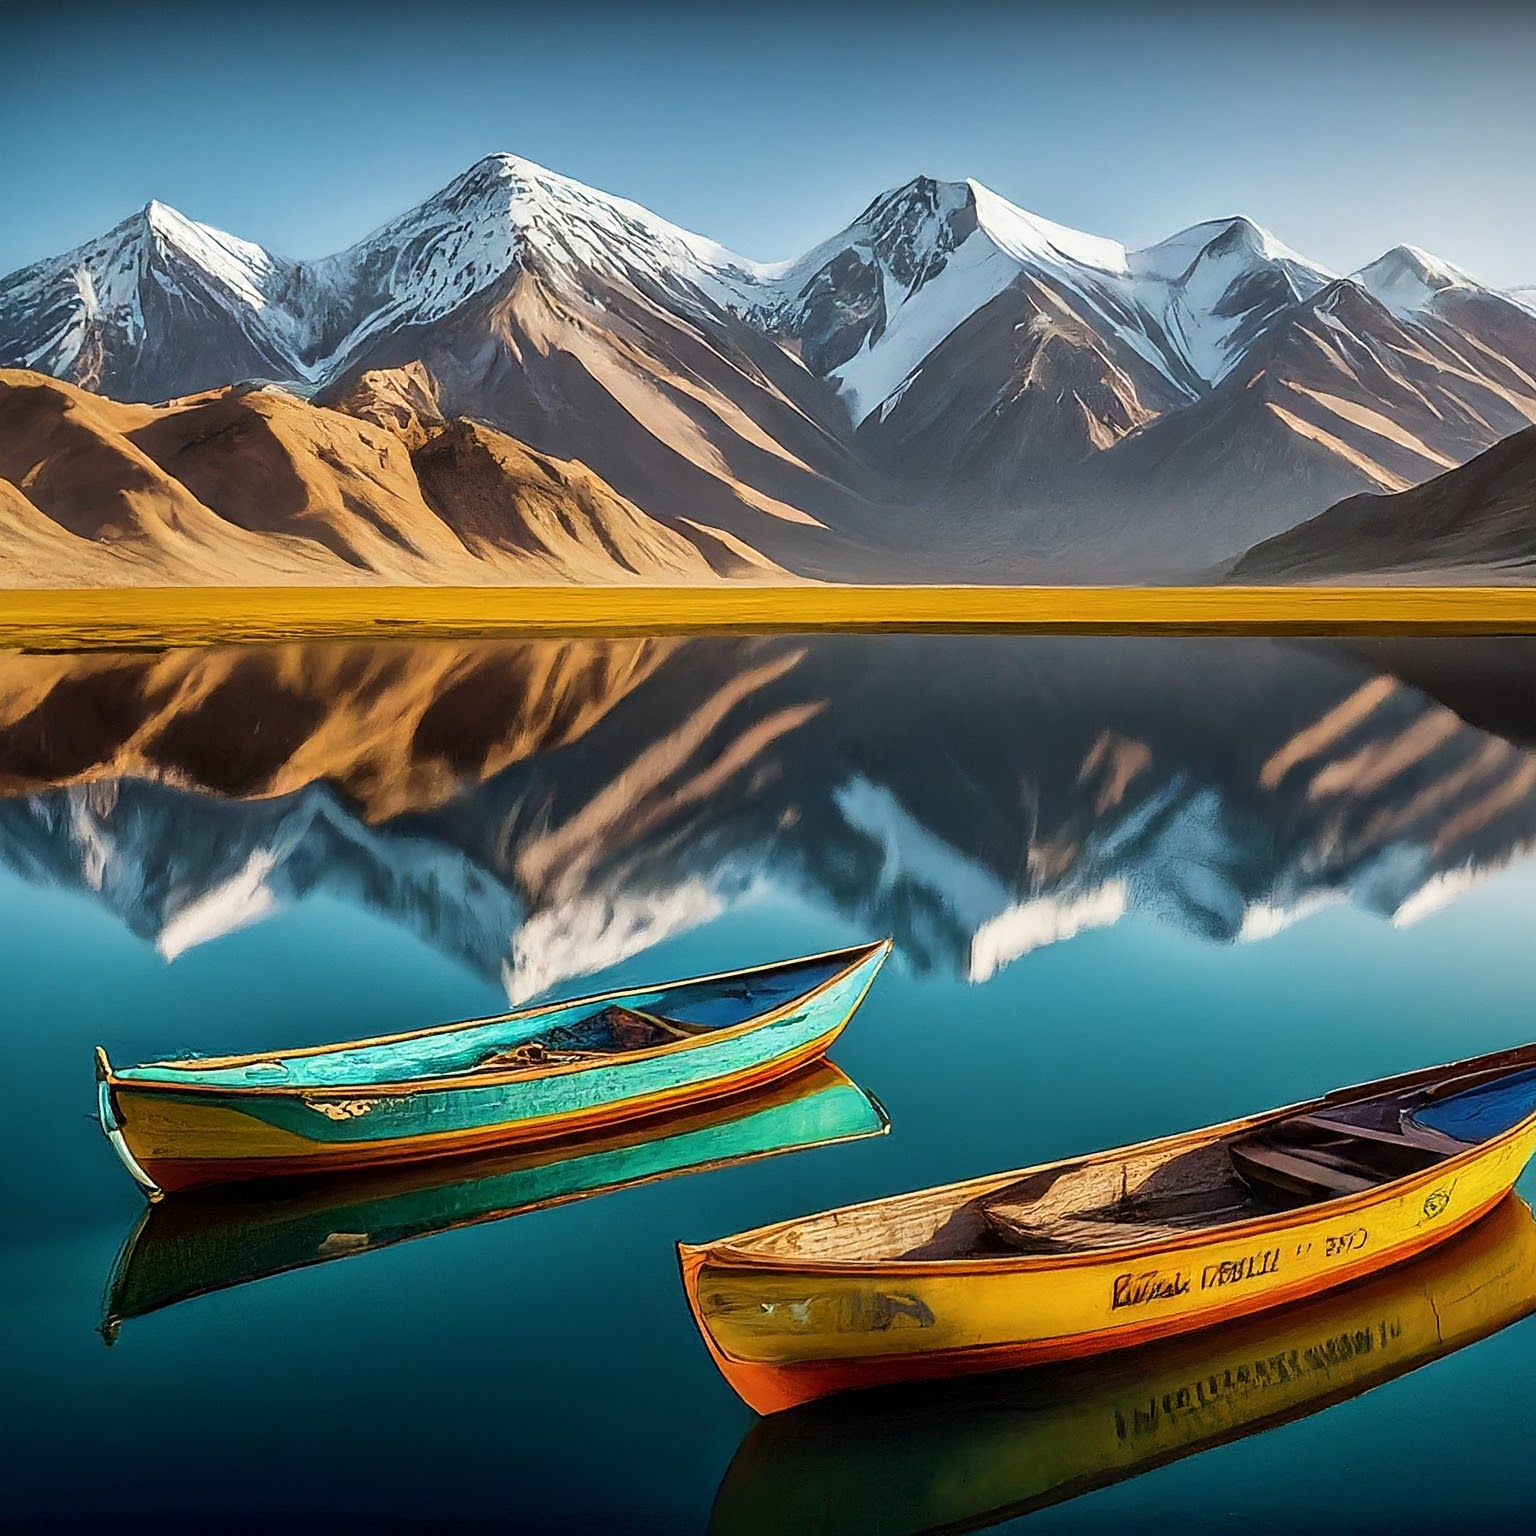 Sunrise over Karakul Lake, Tajikistan, with mountains reflected in the water and shepherd's boats.